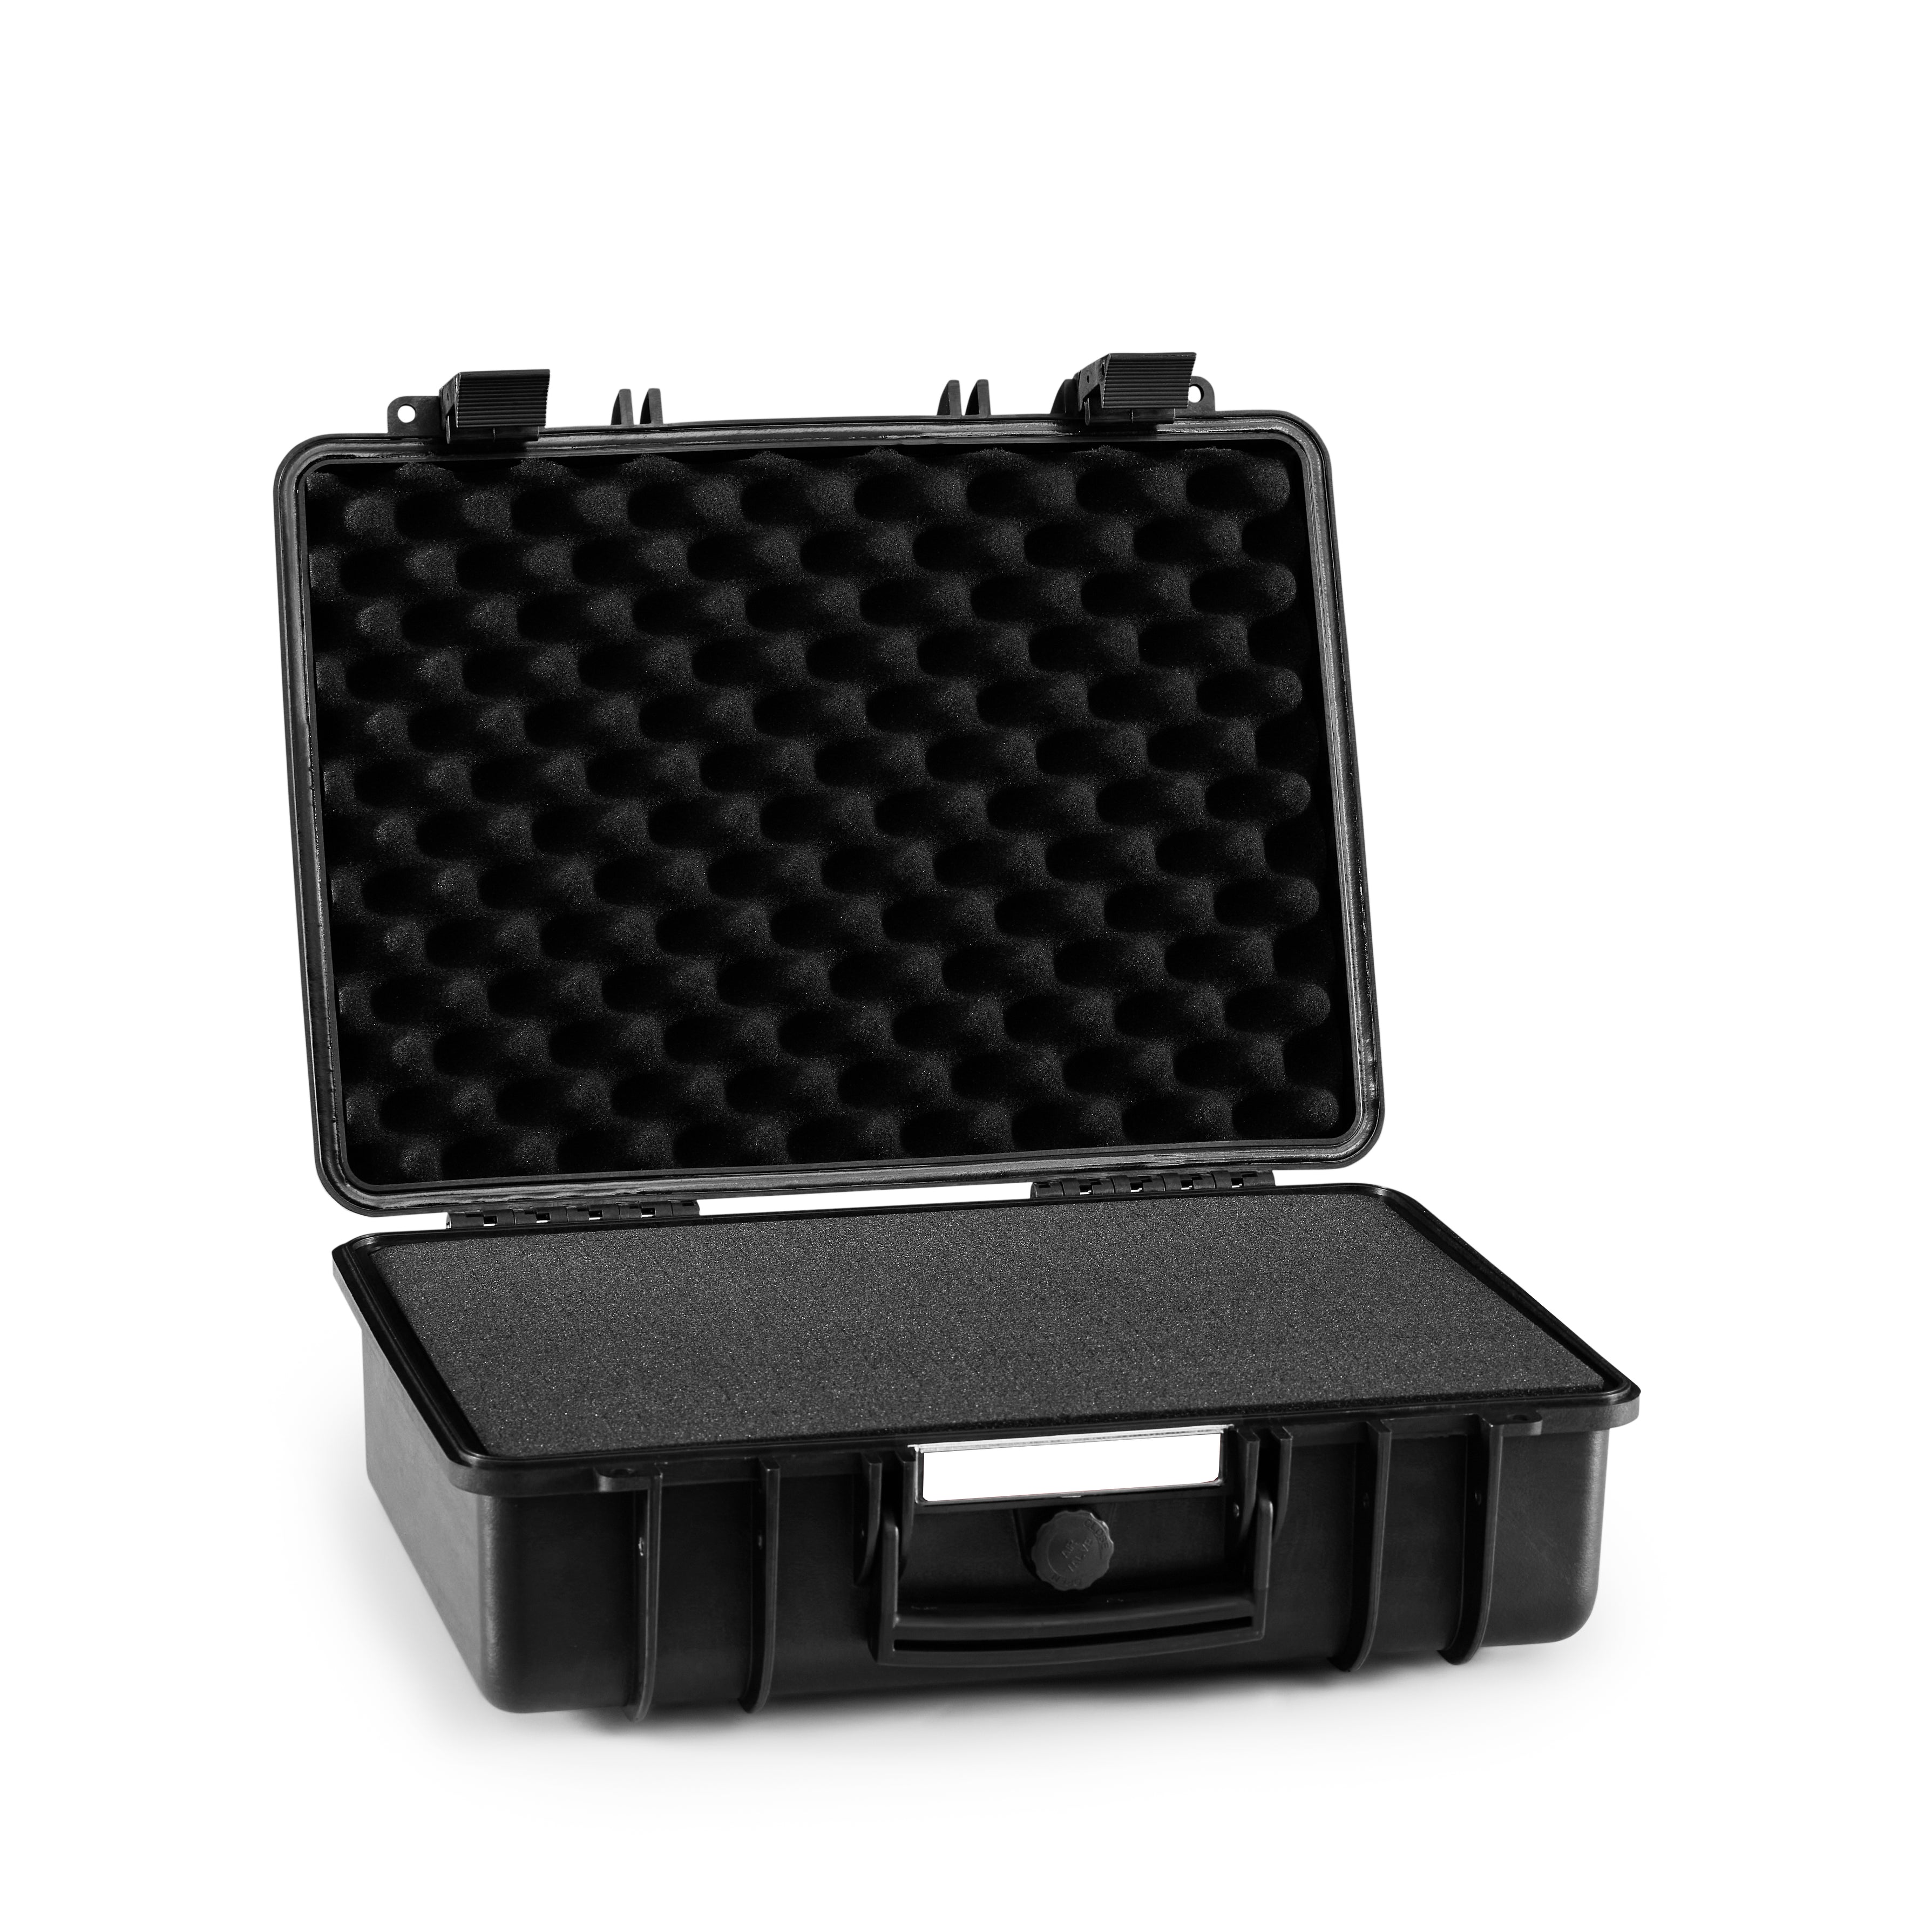 BluBox Waterproof Medium Carry Case 1712